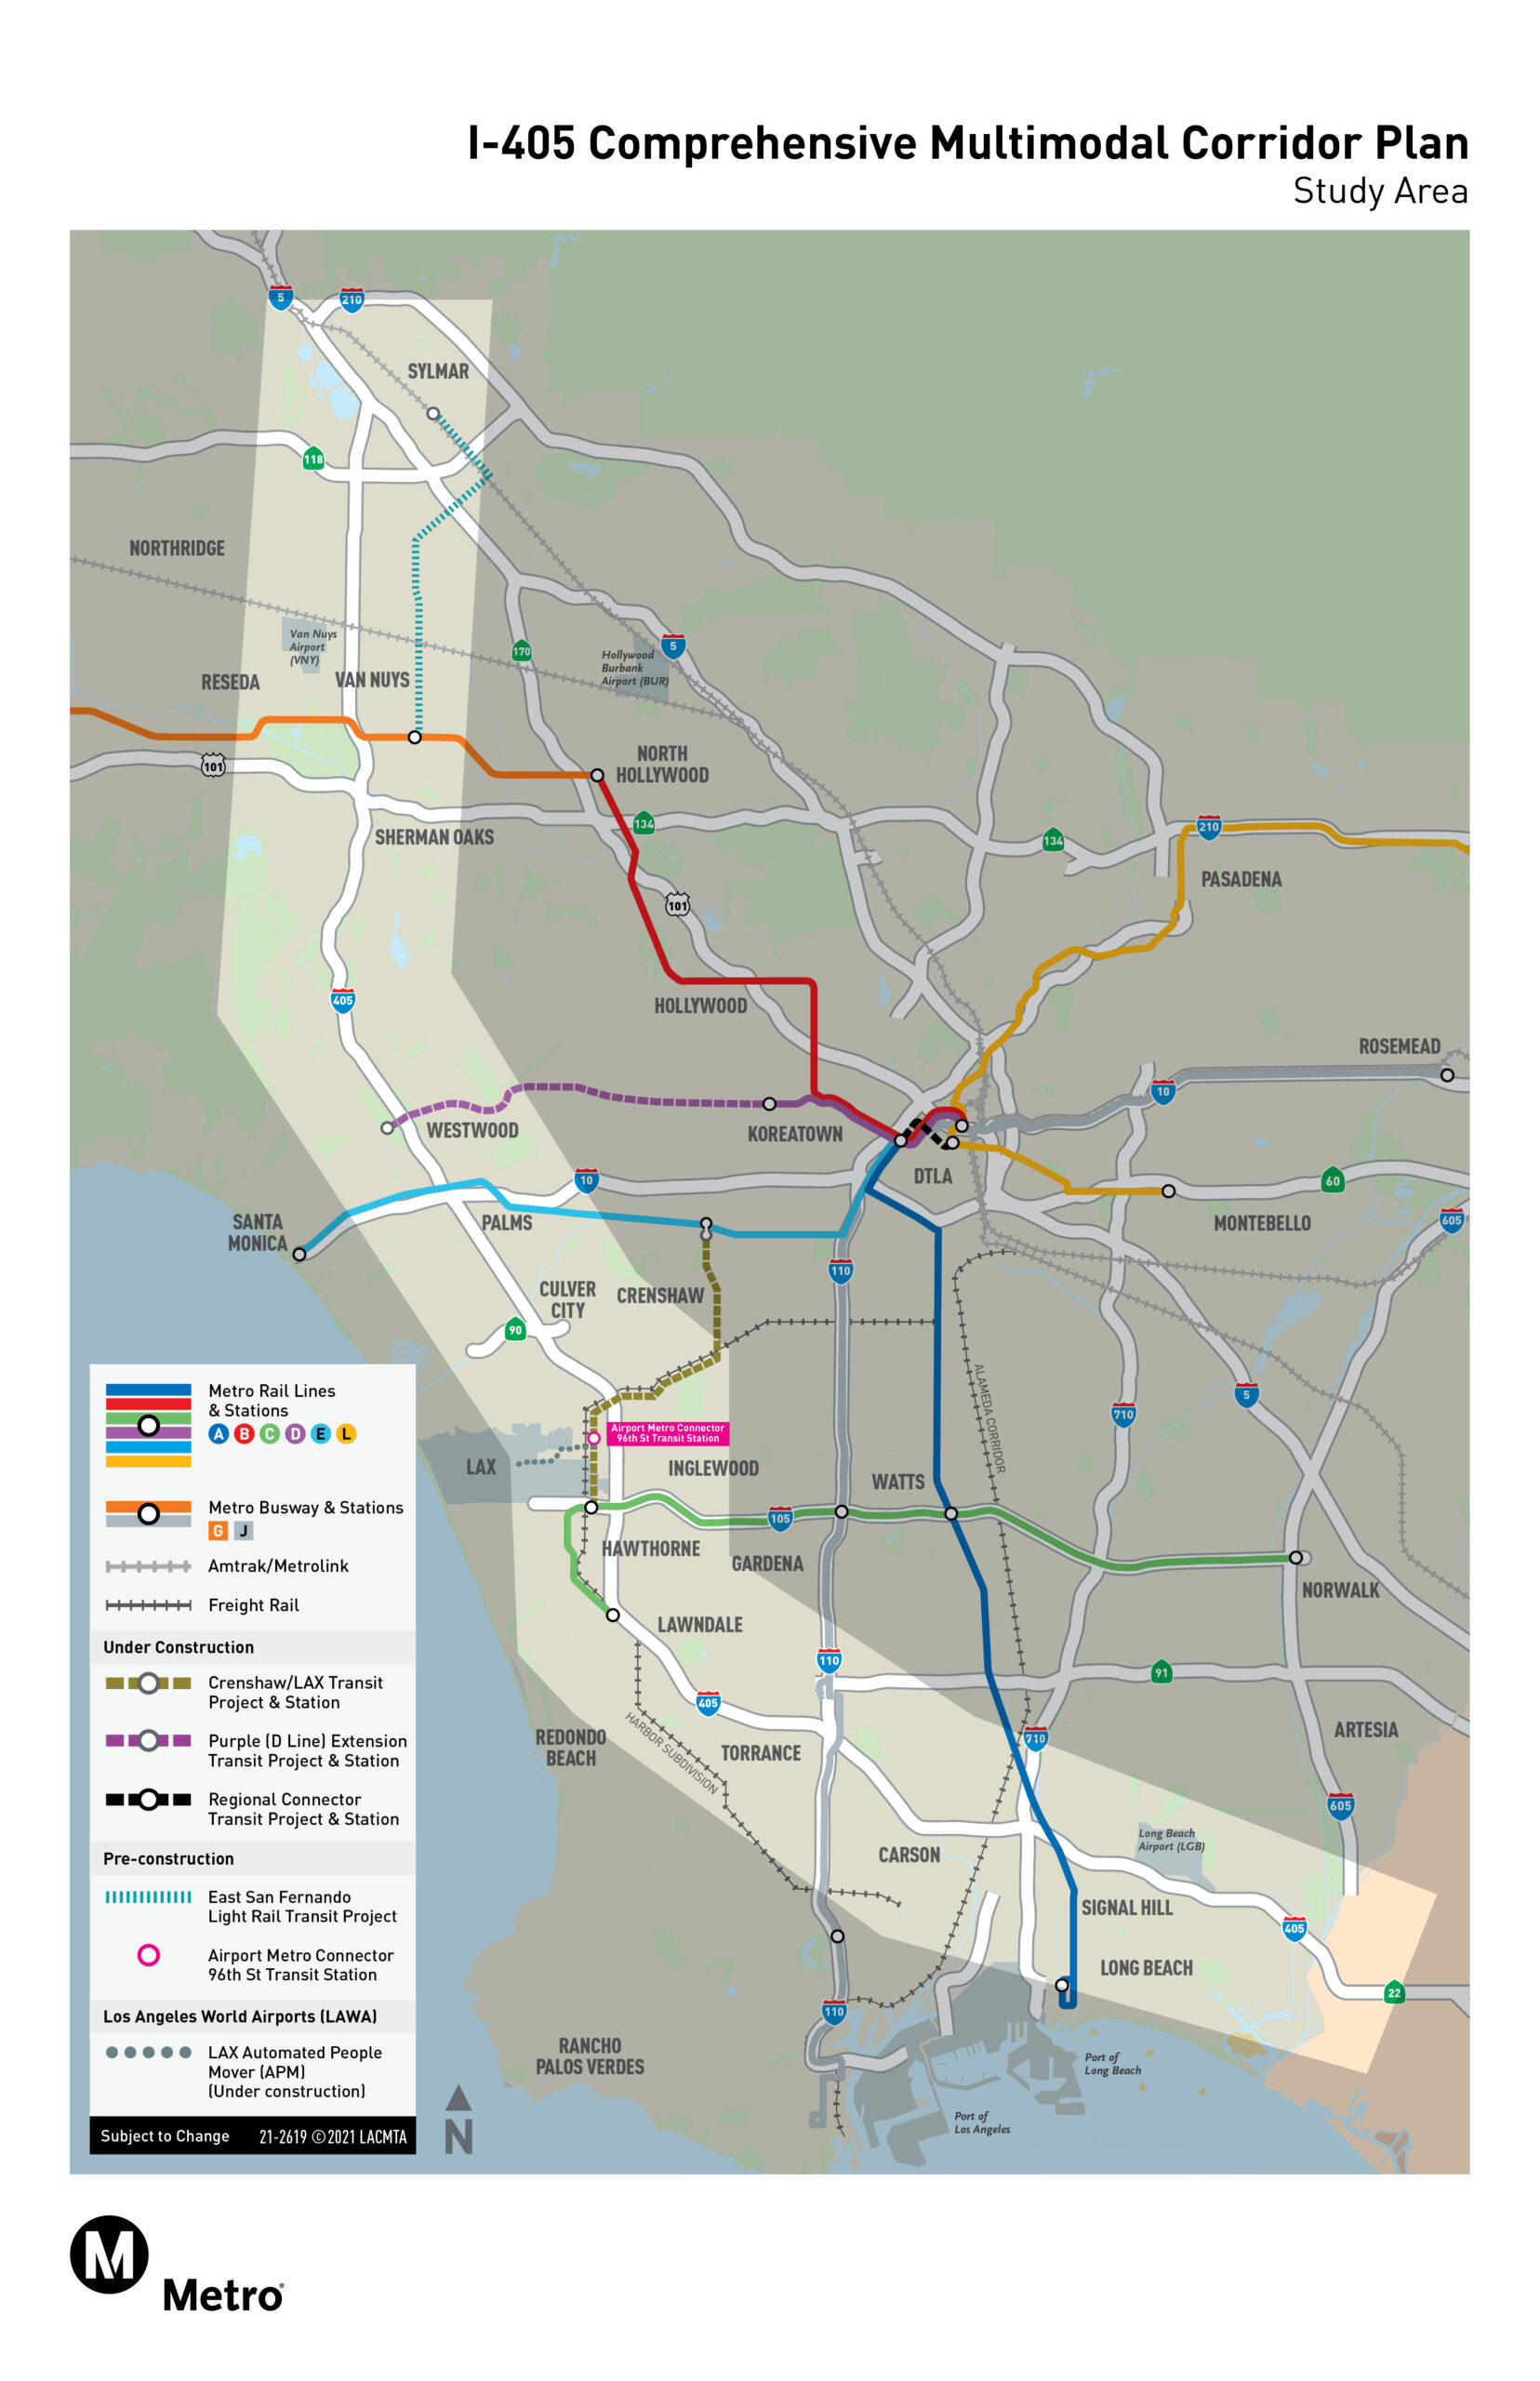 Map of I-405 Comprehensive Multimodal Corridor Plan Study Area.